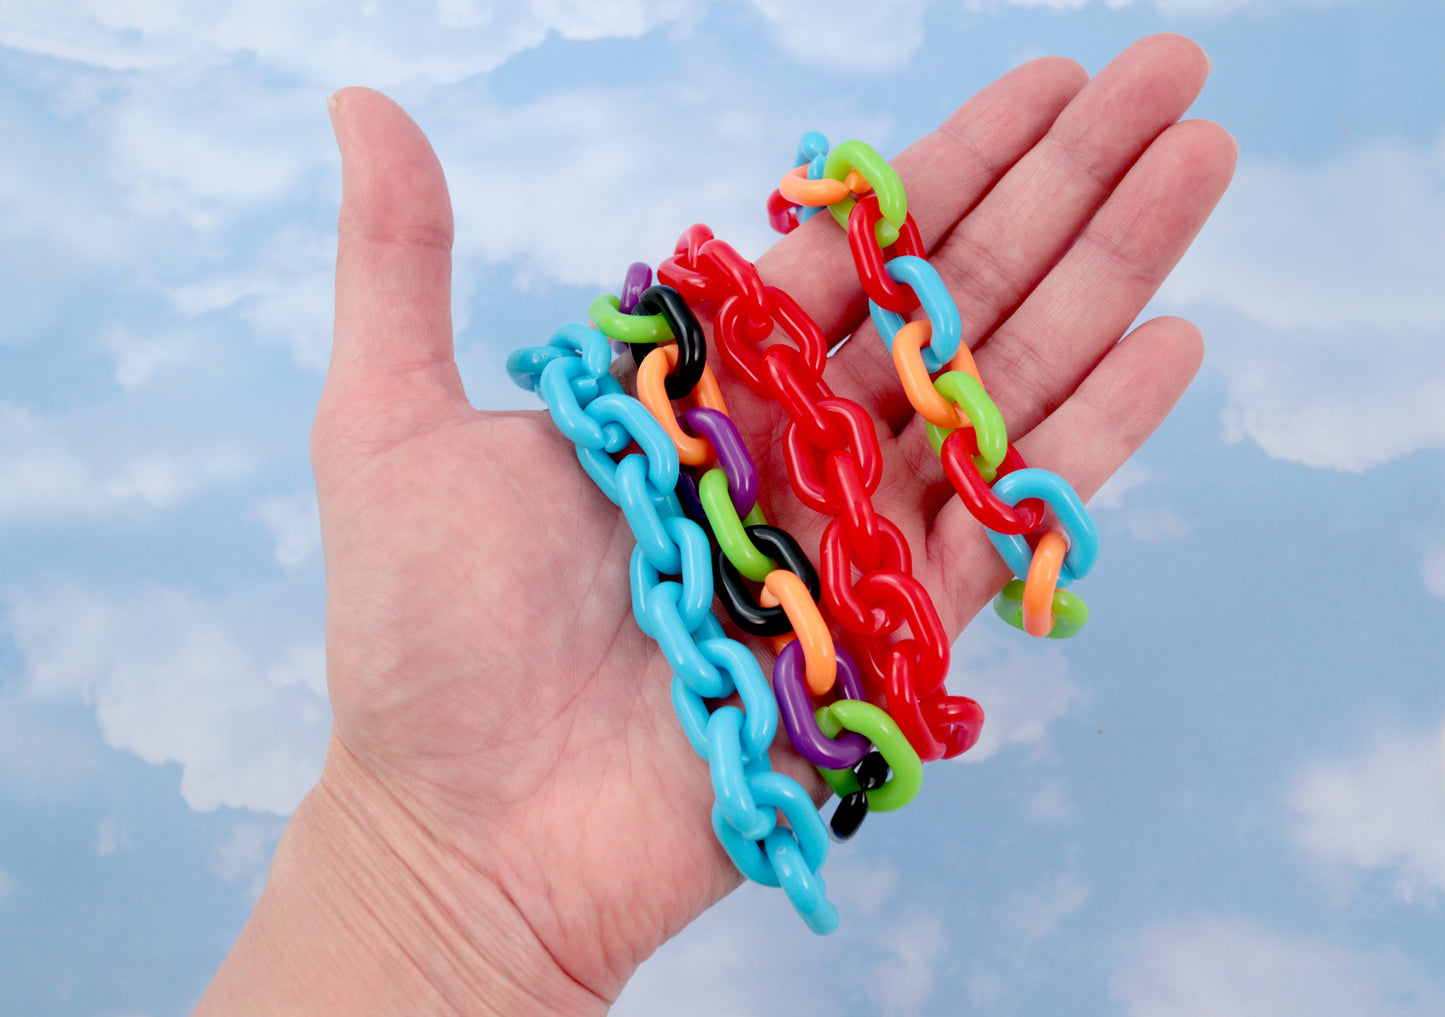 Plastic Chain Links - 20mm Deep Dark Colors Plastic or Acrylic Chain Links - Mixed Colors - 100 pc set